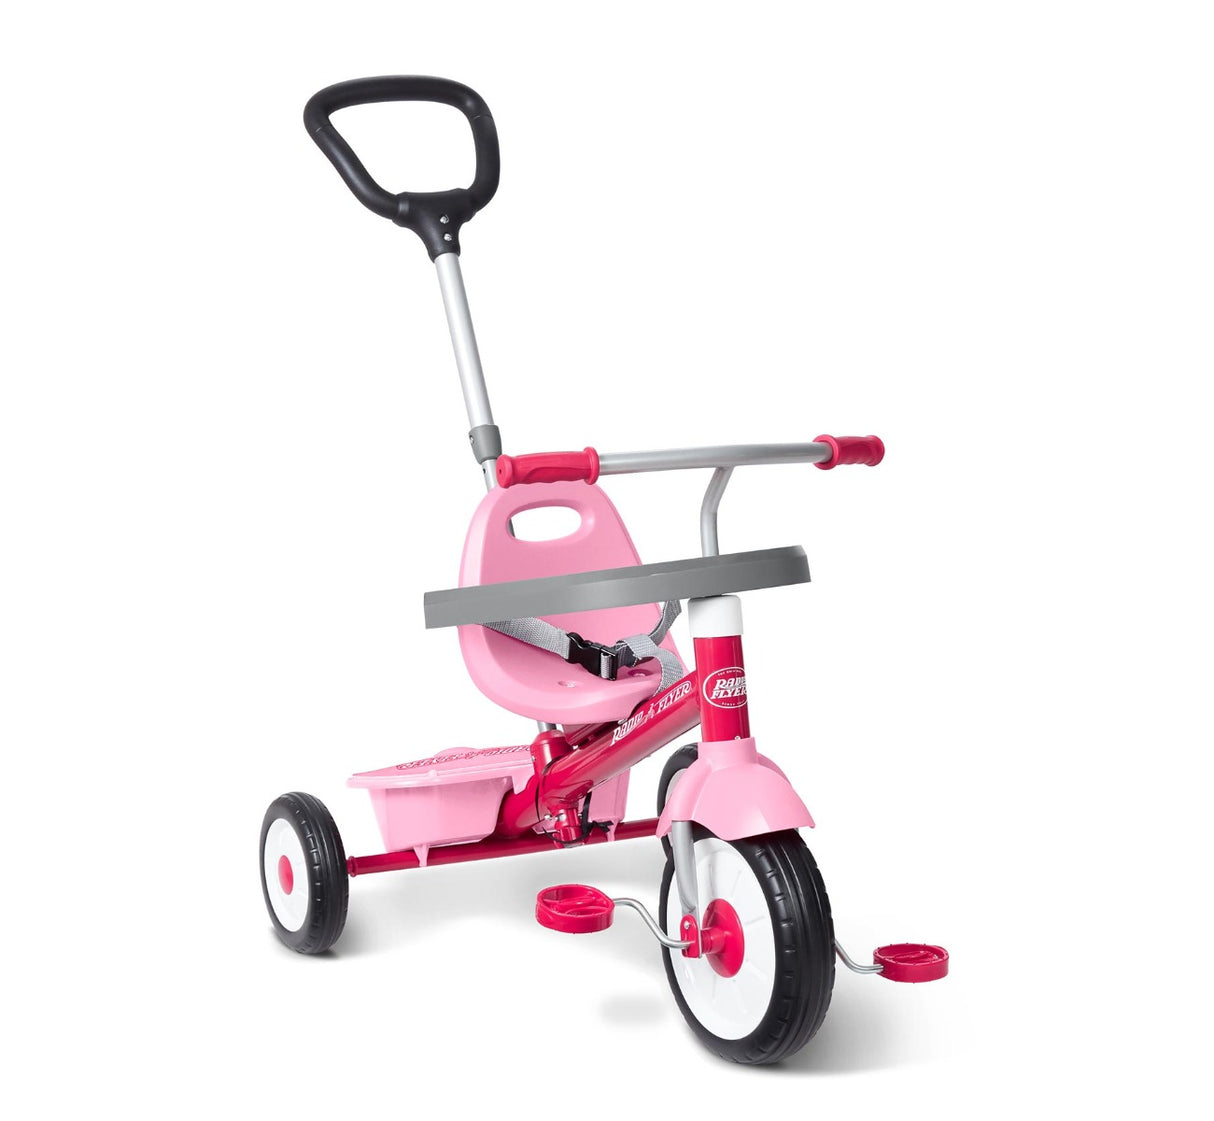 3-in-1 Stroll 'N Trike® Pink Stand Alone in Steering Strike mode